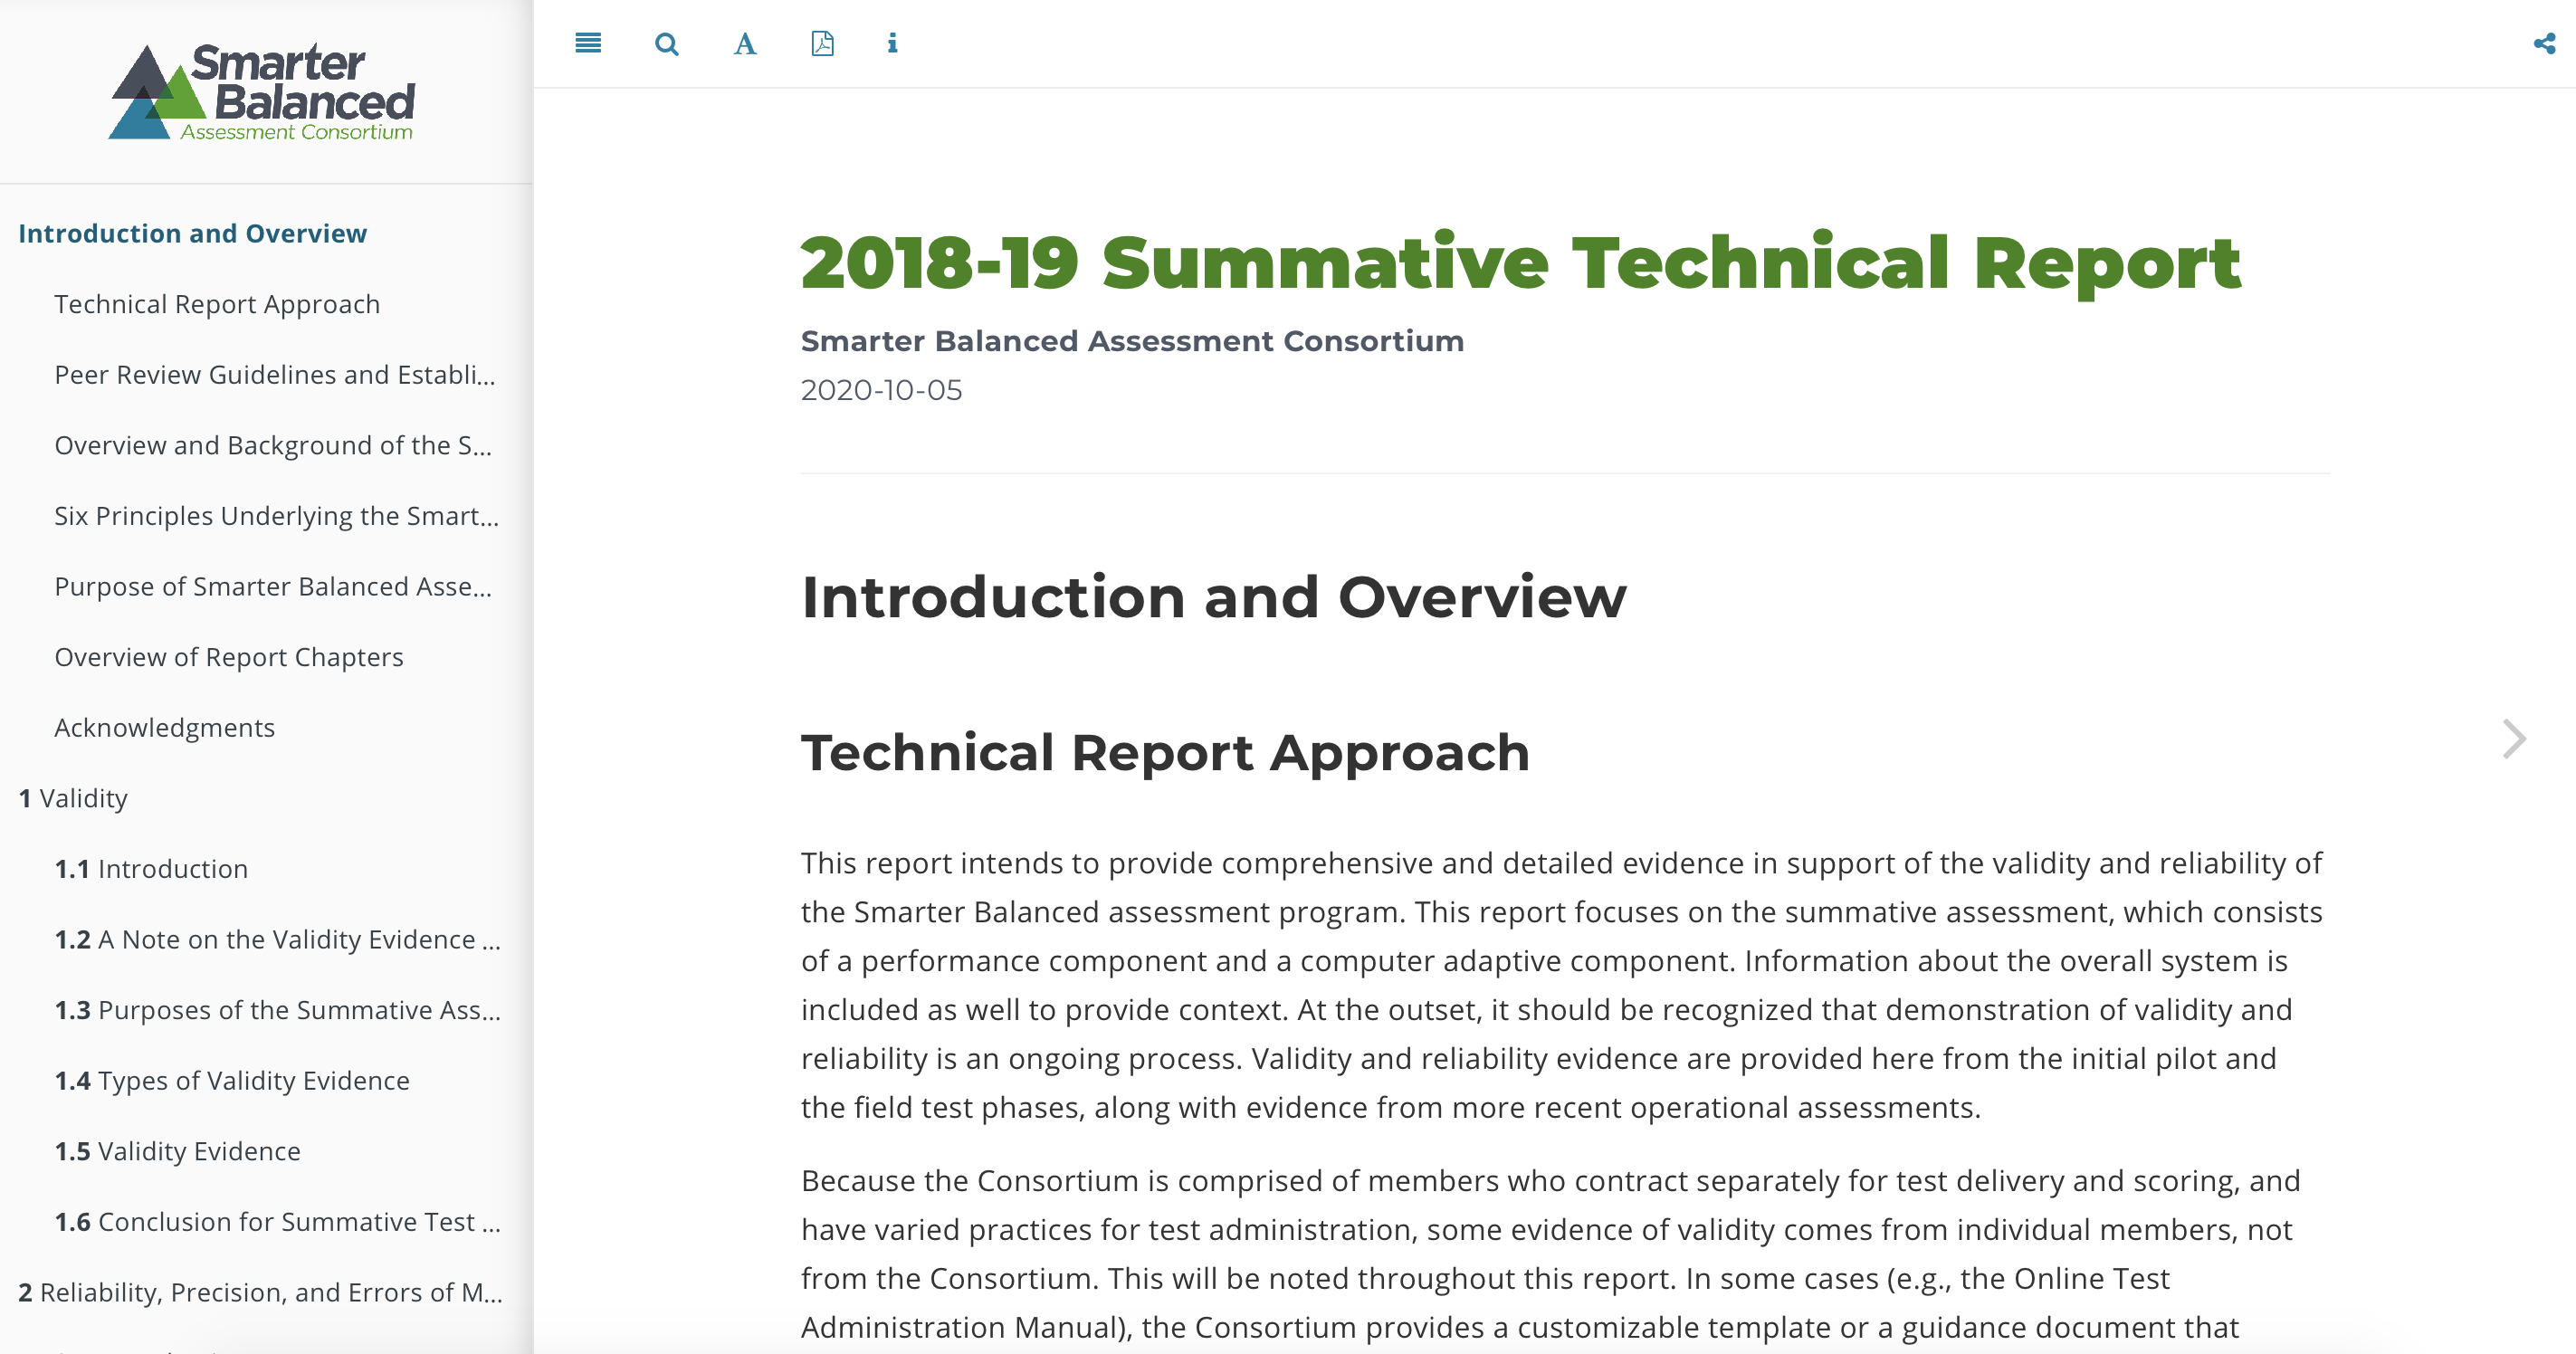 Screenshot of the 2018-19 Summative Technical Report.